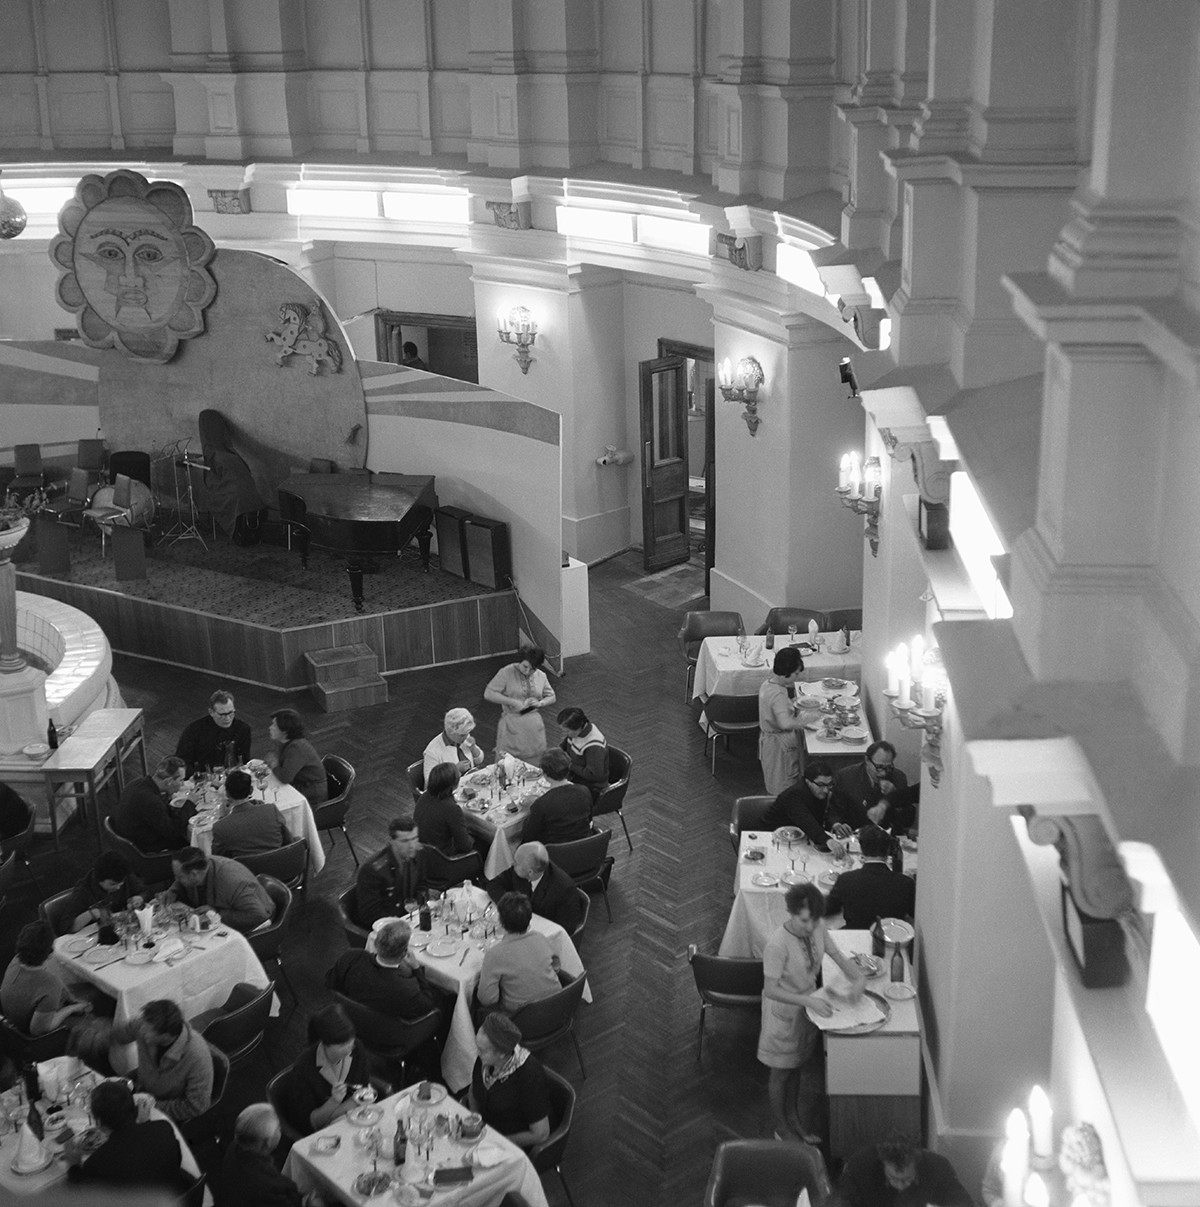 Slavyansky Bazar restaurant in Moscow, 1968.